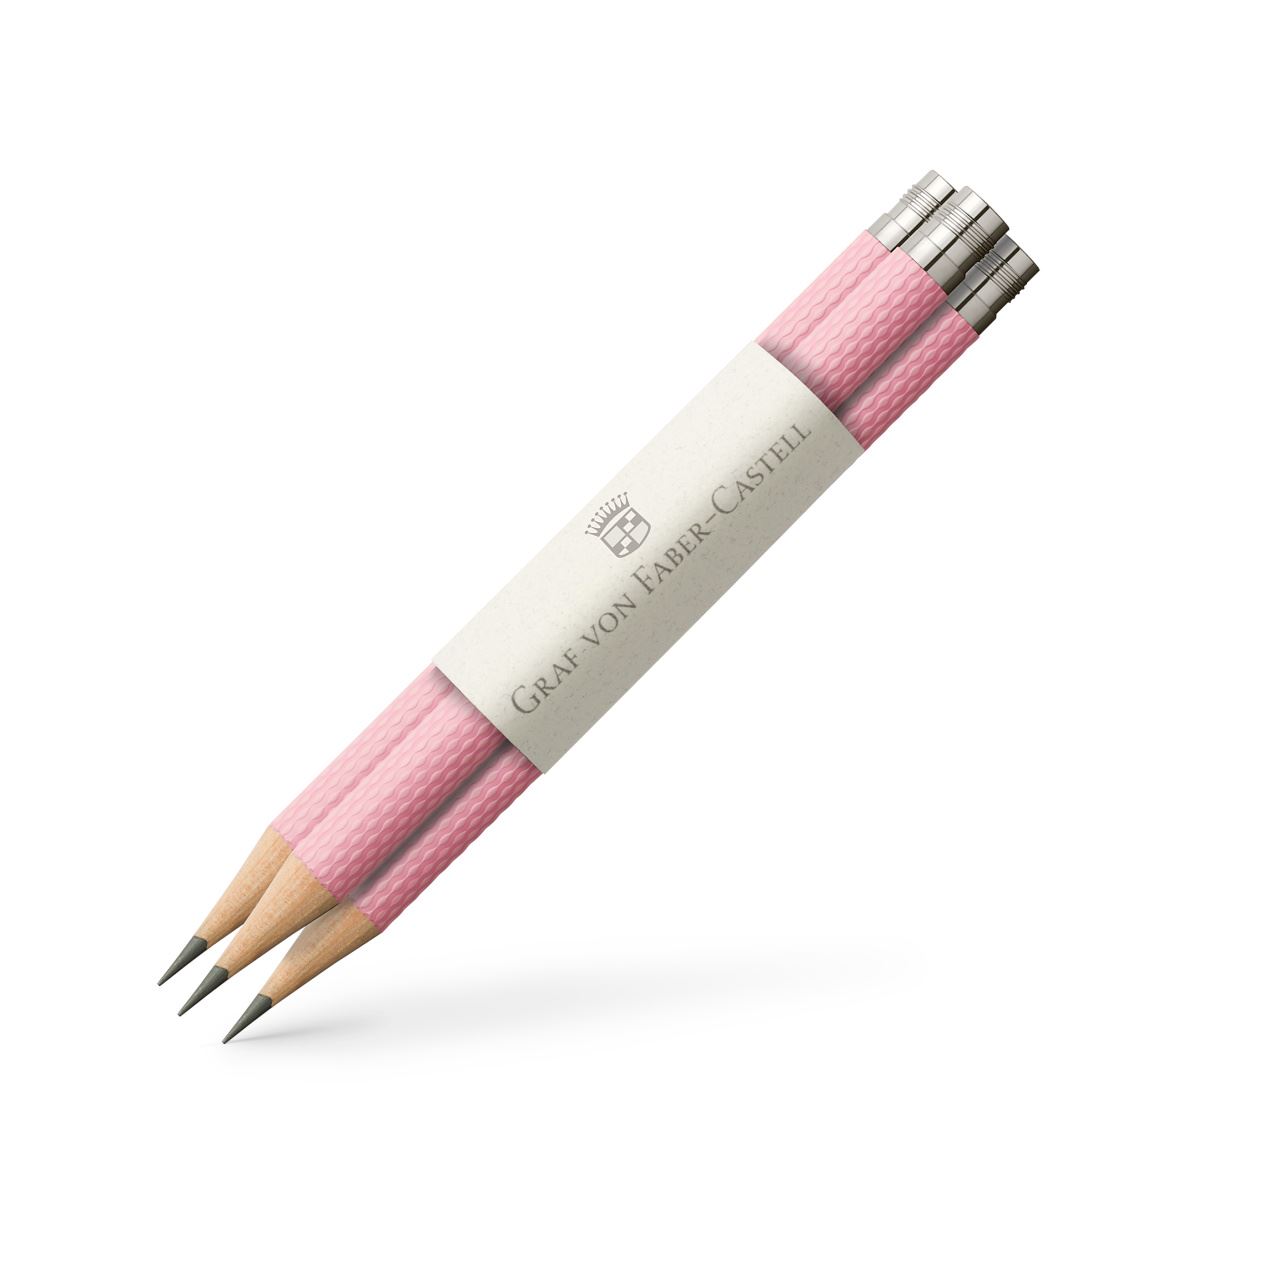 Graf-von-Faber-Castell - 3 crayons graphite de poche Guilloché, Yozakura